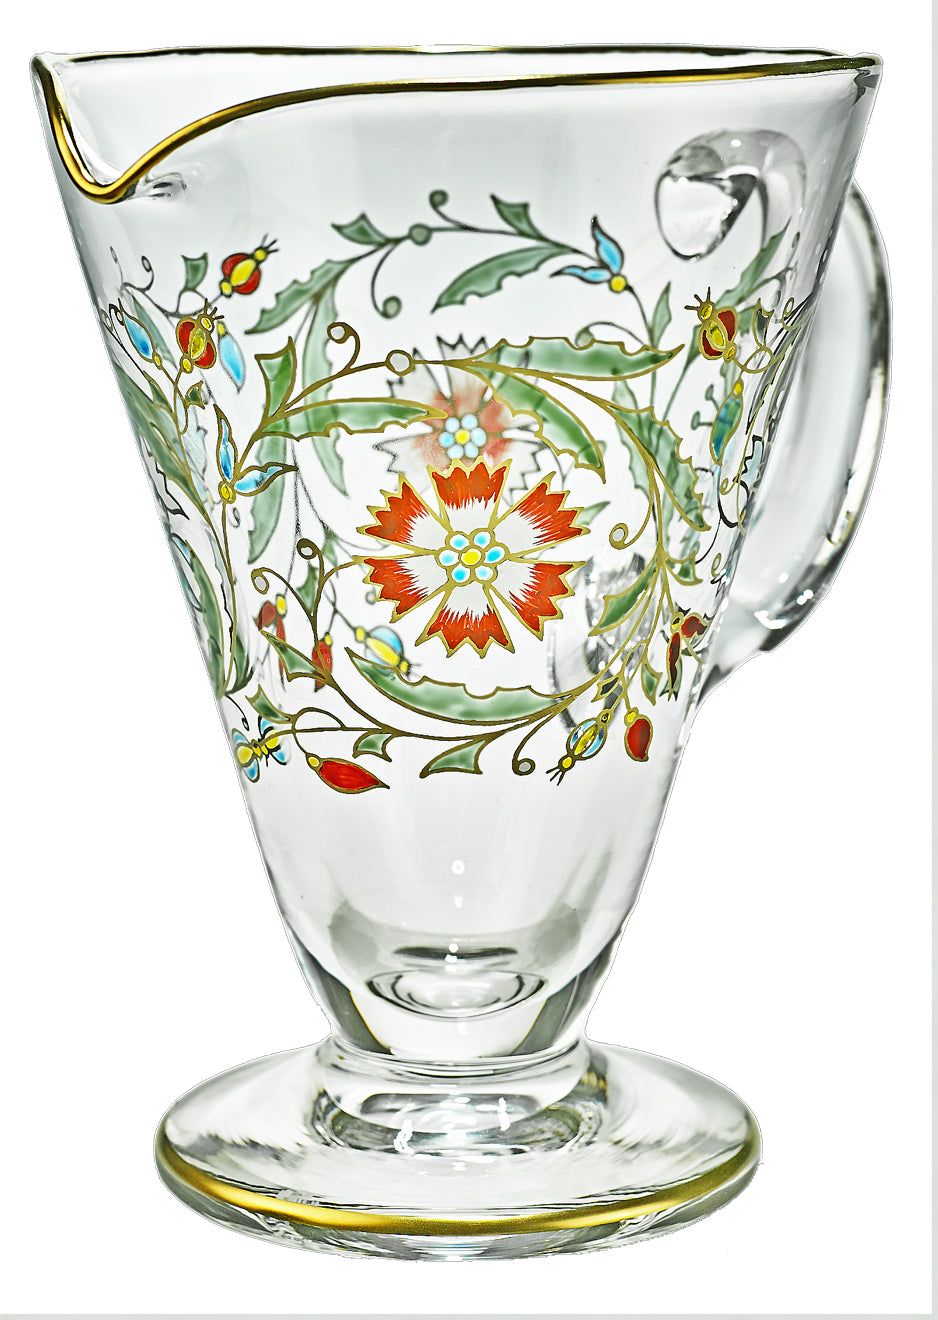 ELISABETH - Krug mit Handmalerei, klares Glas, 0.75 Liter, ca. 220 mm